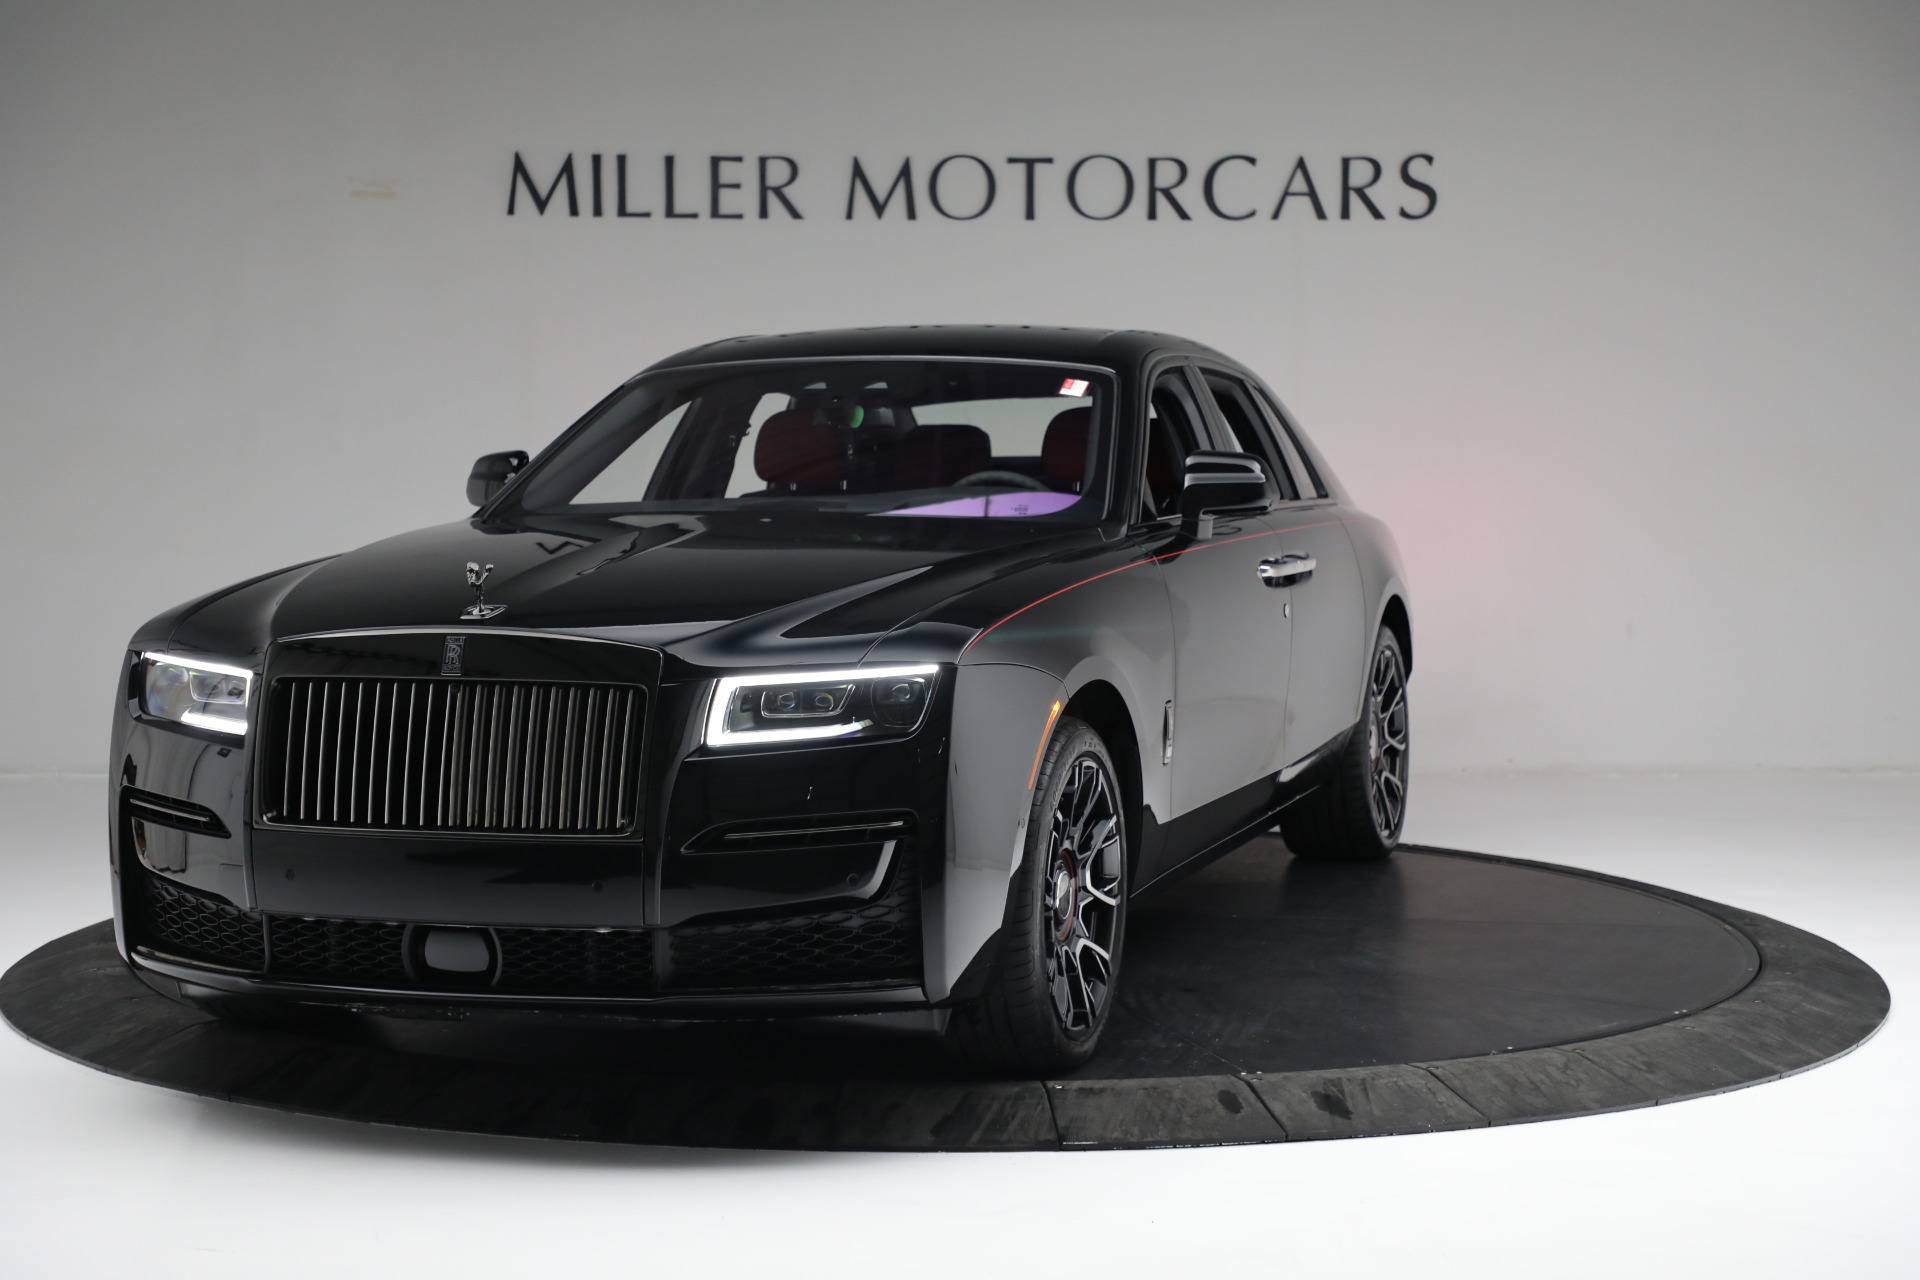 New 2022 RollsRoyce Black Badge Ghost For Sale () Miller Motorcars